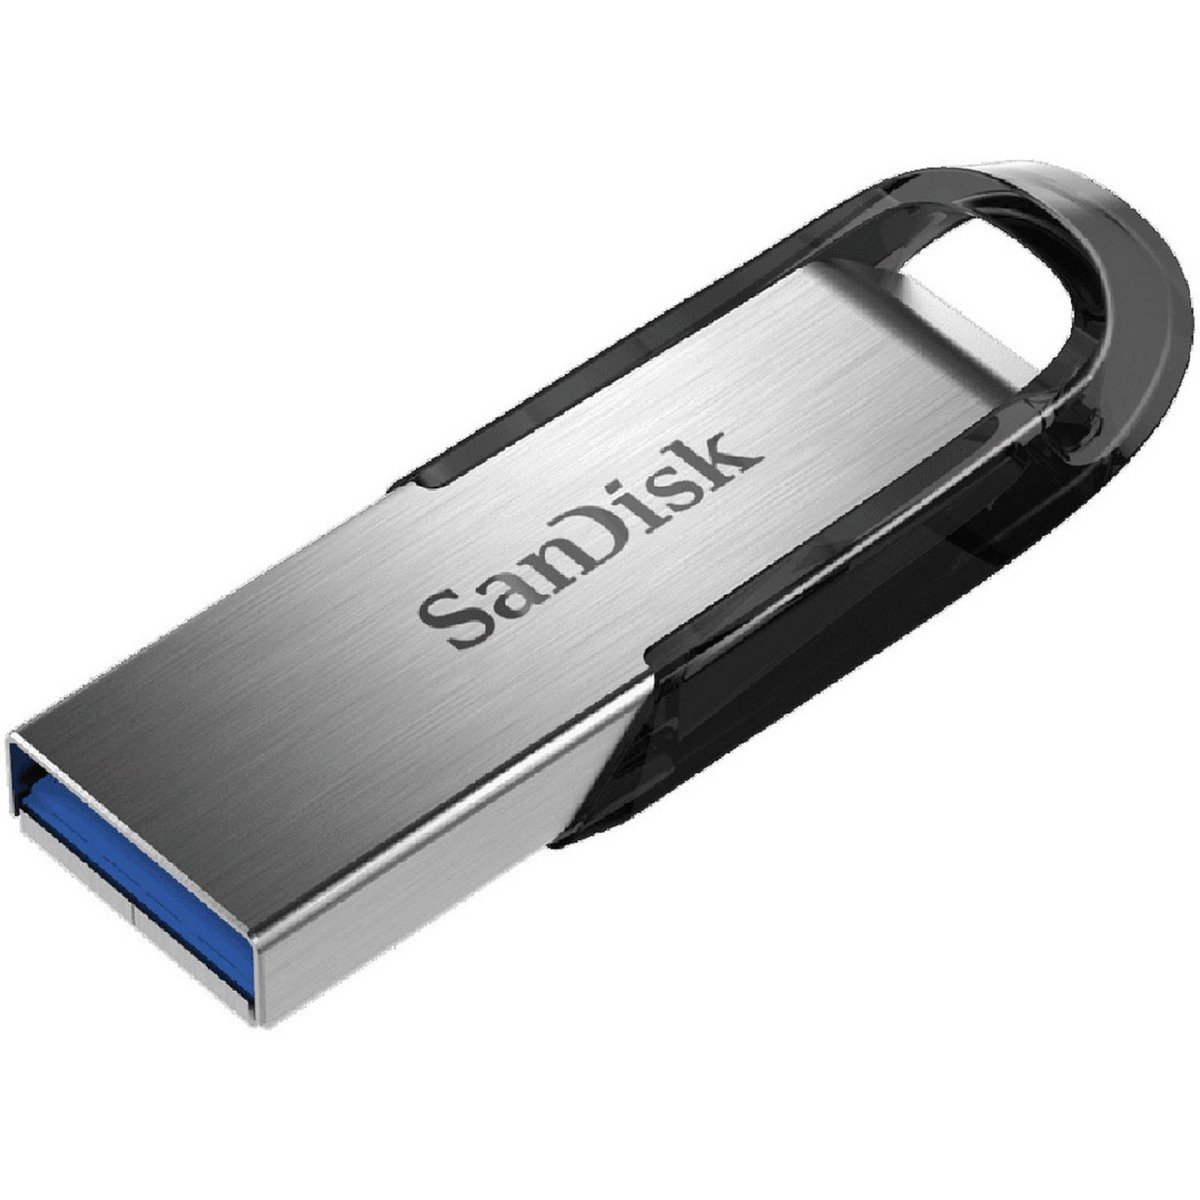 SanDisk Flash Drive SDCZ73-32G 32GB